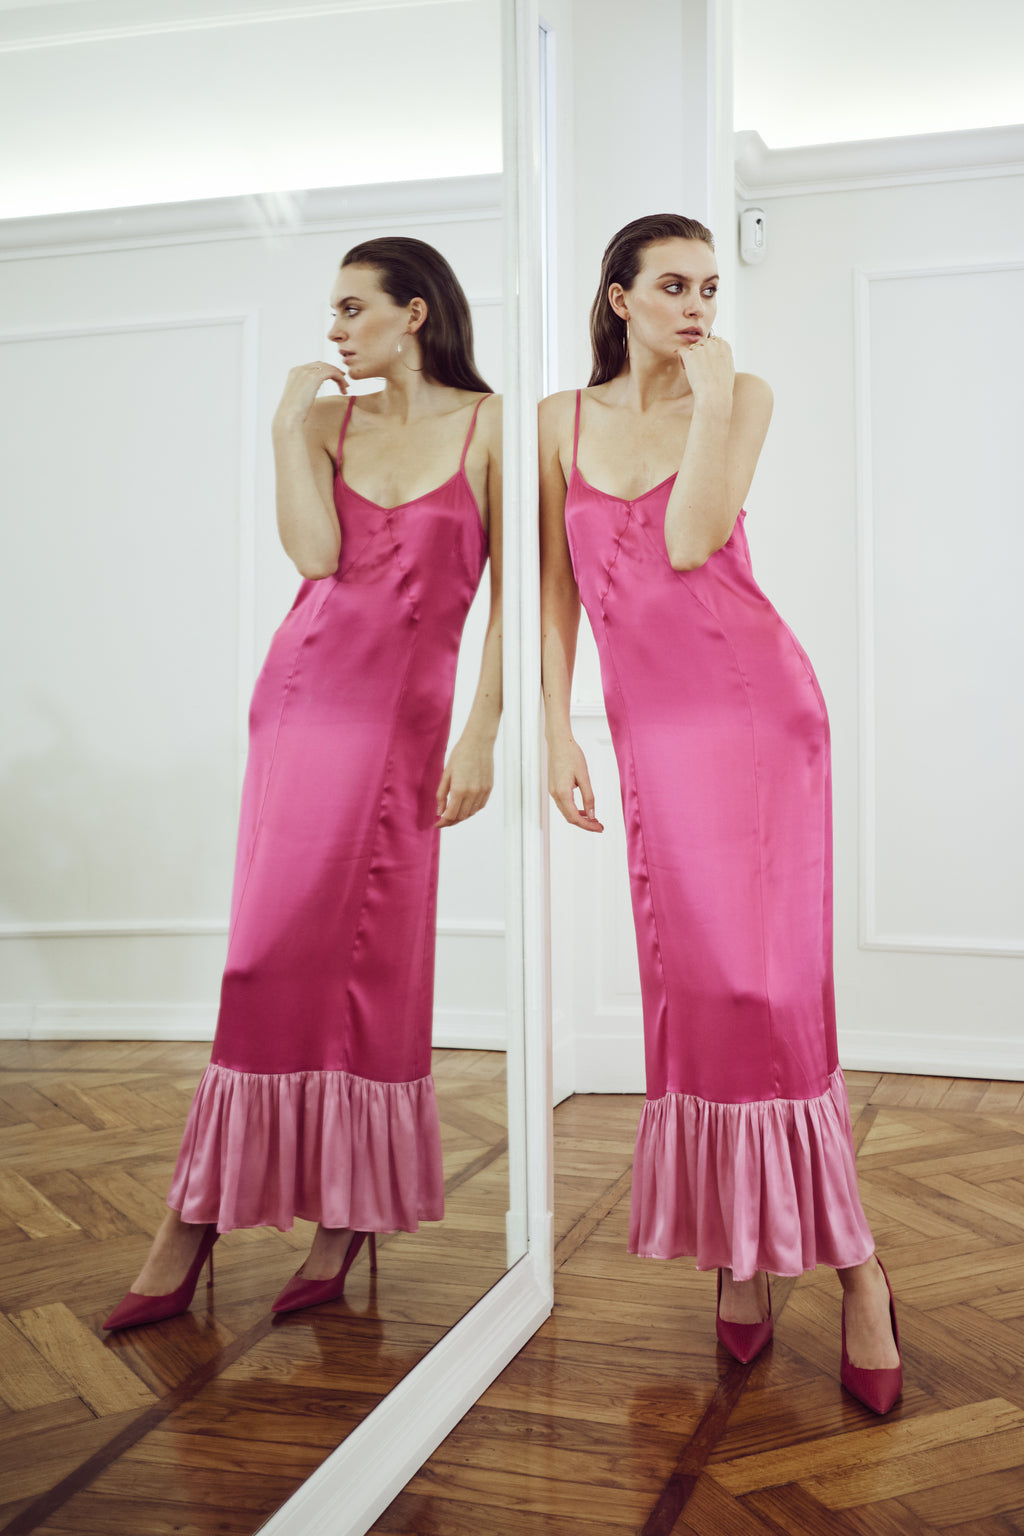 ZEFIRO-DRESS-Abito-long-dress-in-raso-di-seta-fucsia-con-balza-rosa